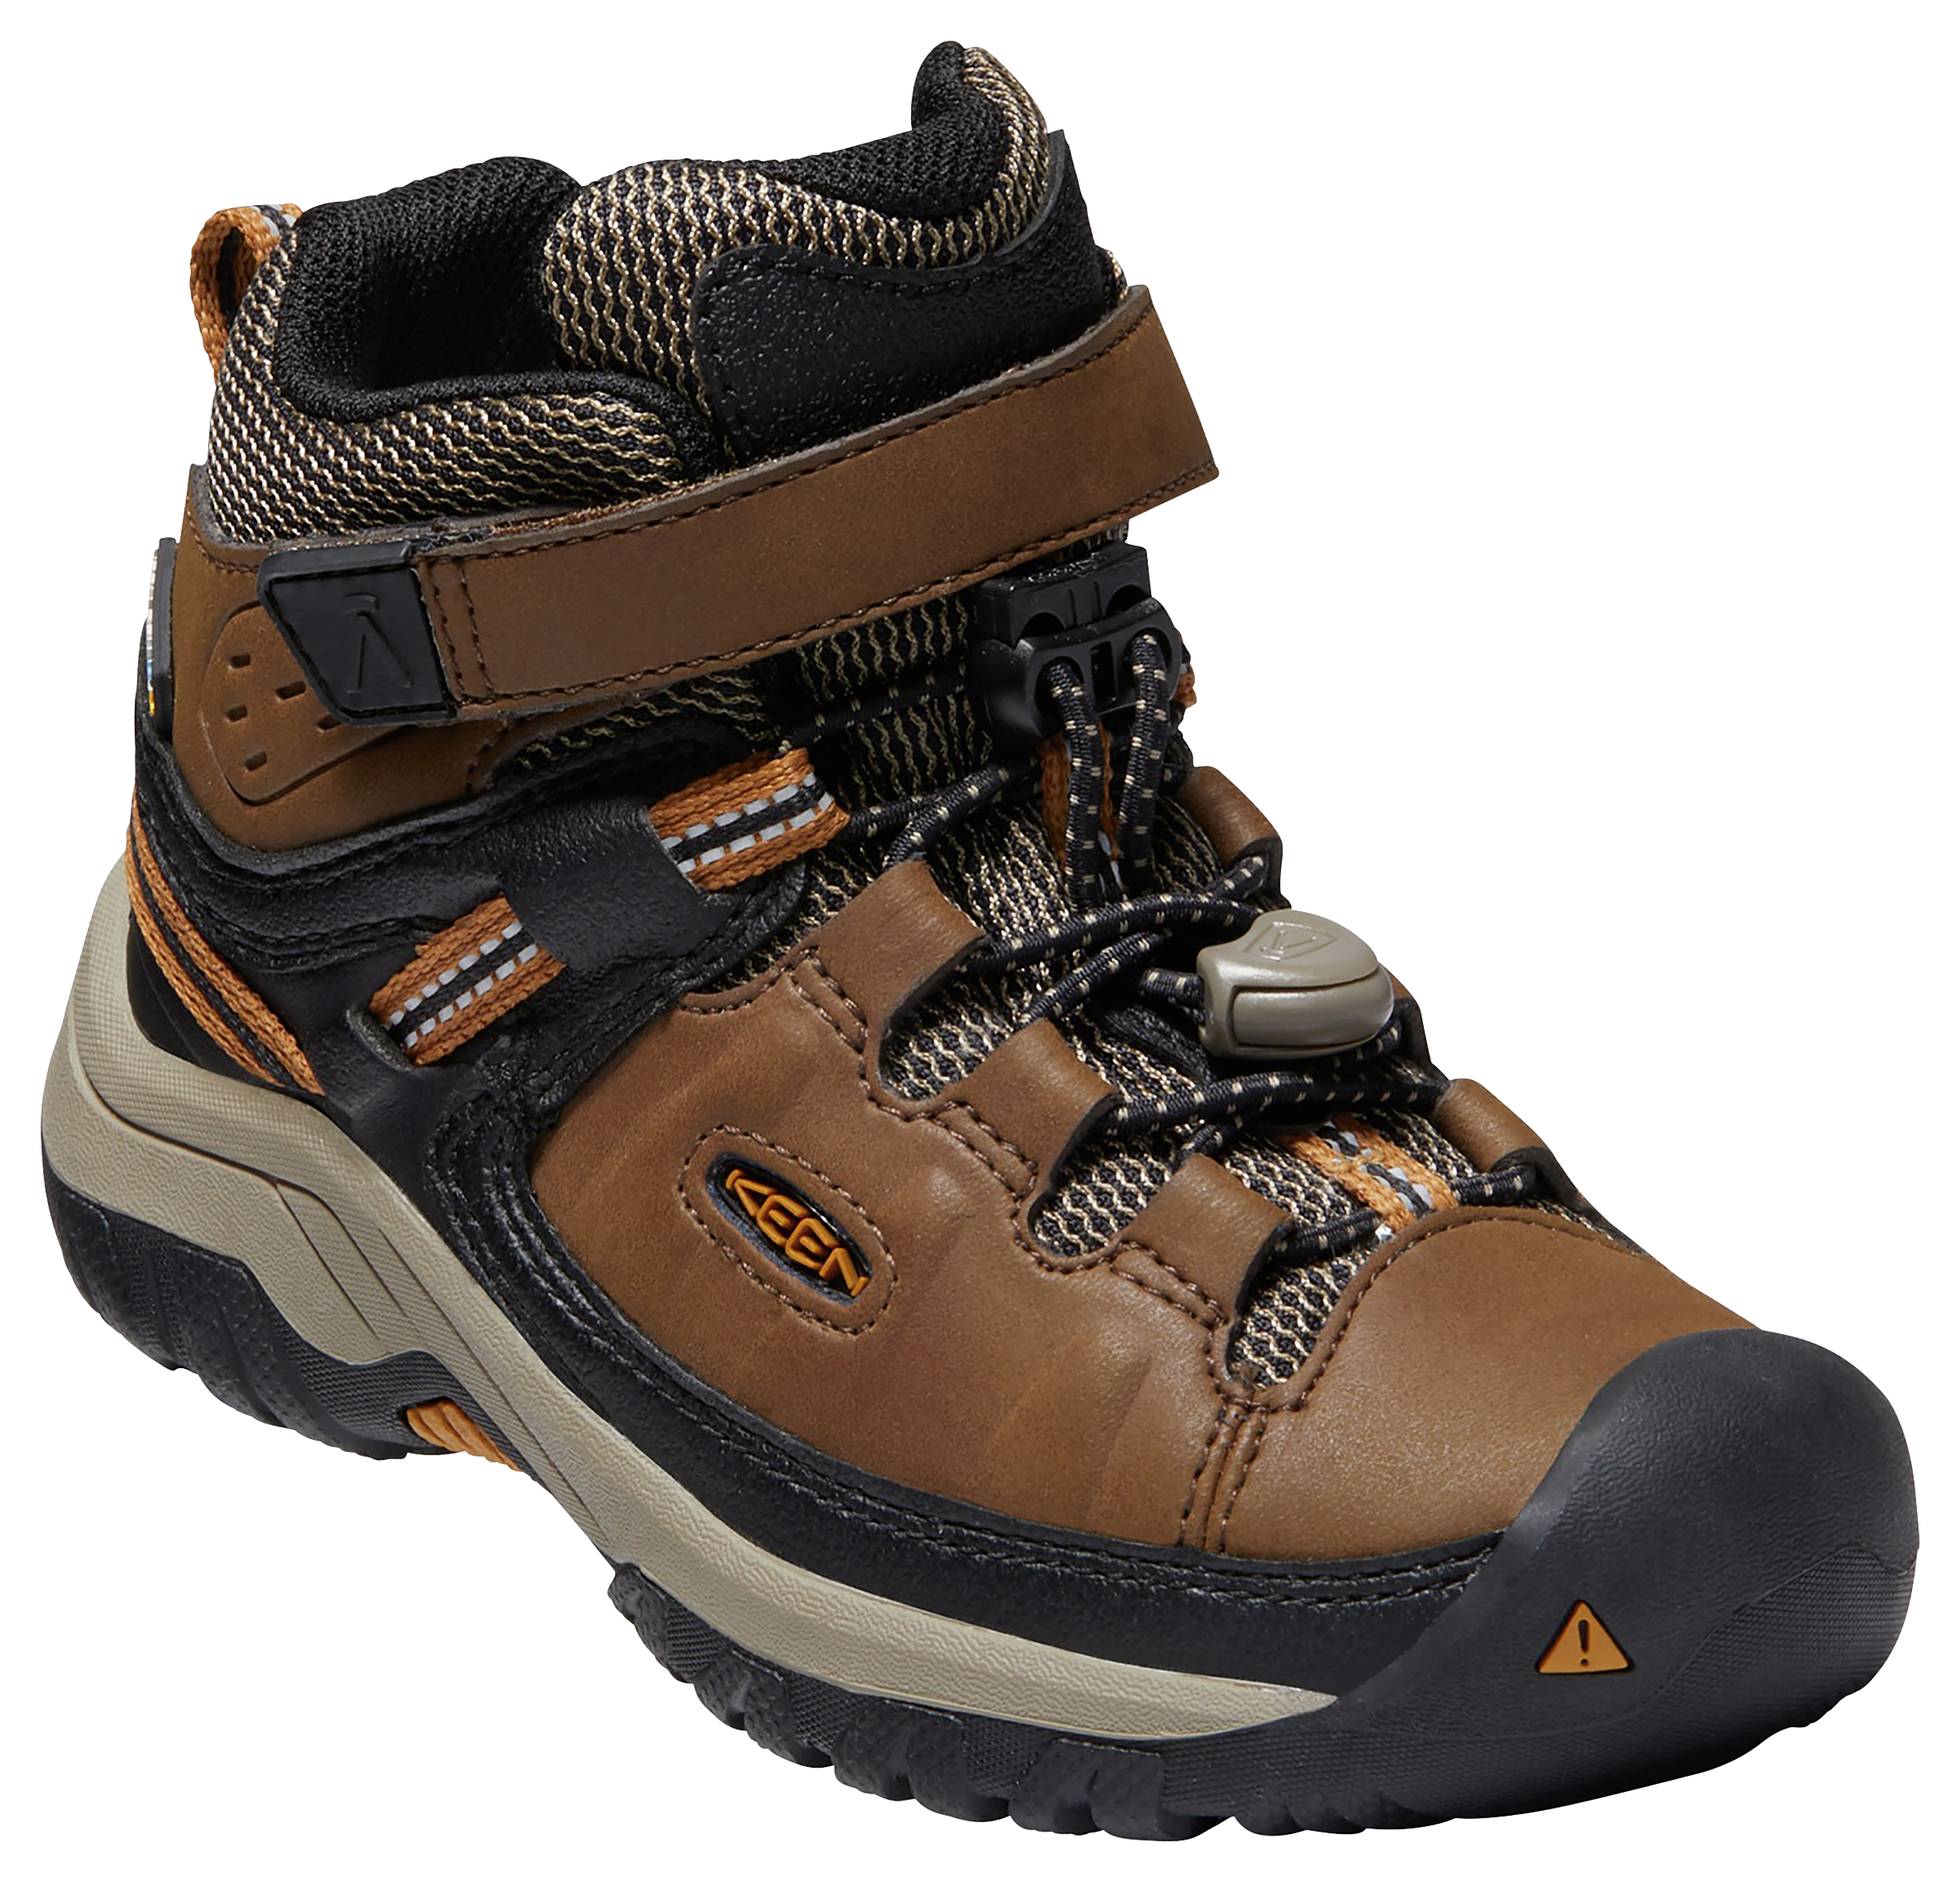 KEEN Targhee Mid Waterproof Hiking Boots with Hook-and-Loop Strap for Kids - Dark Earth/Golden Brown - 12 Kids